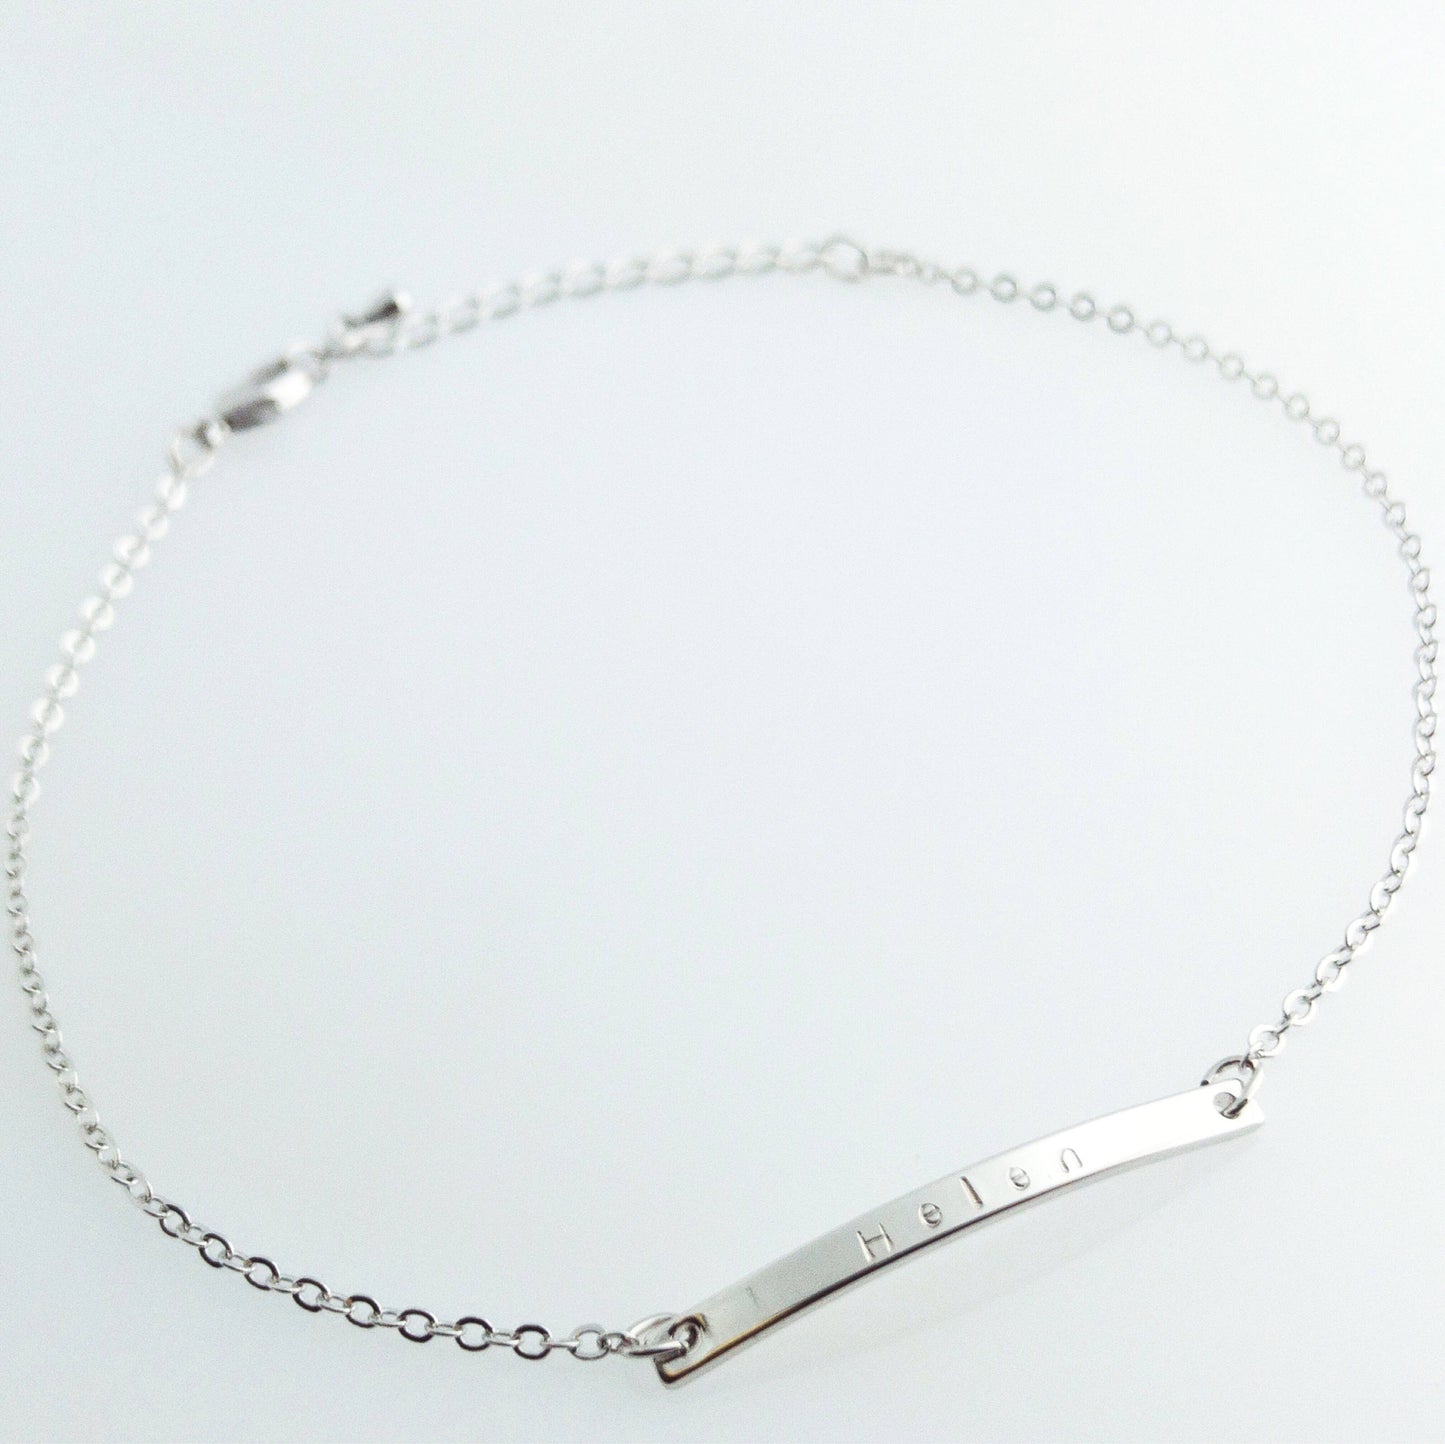 Customized Name Bracelet - Gift for Daughter or Mom